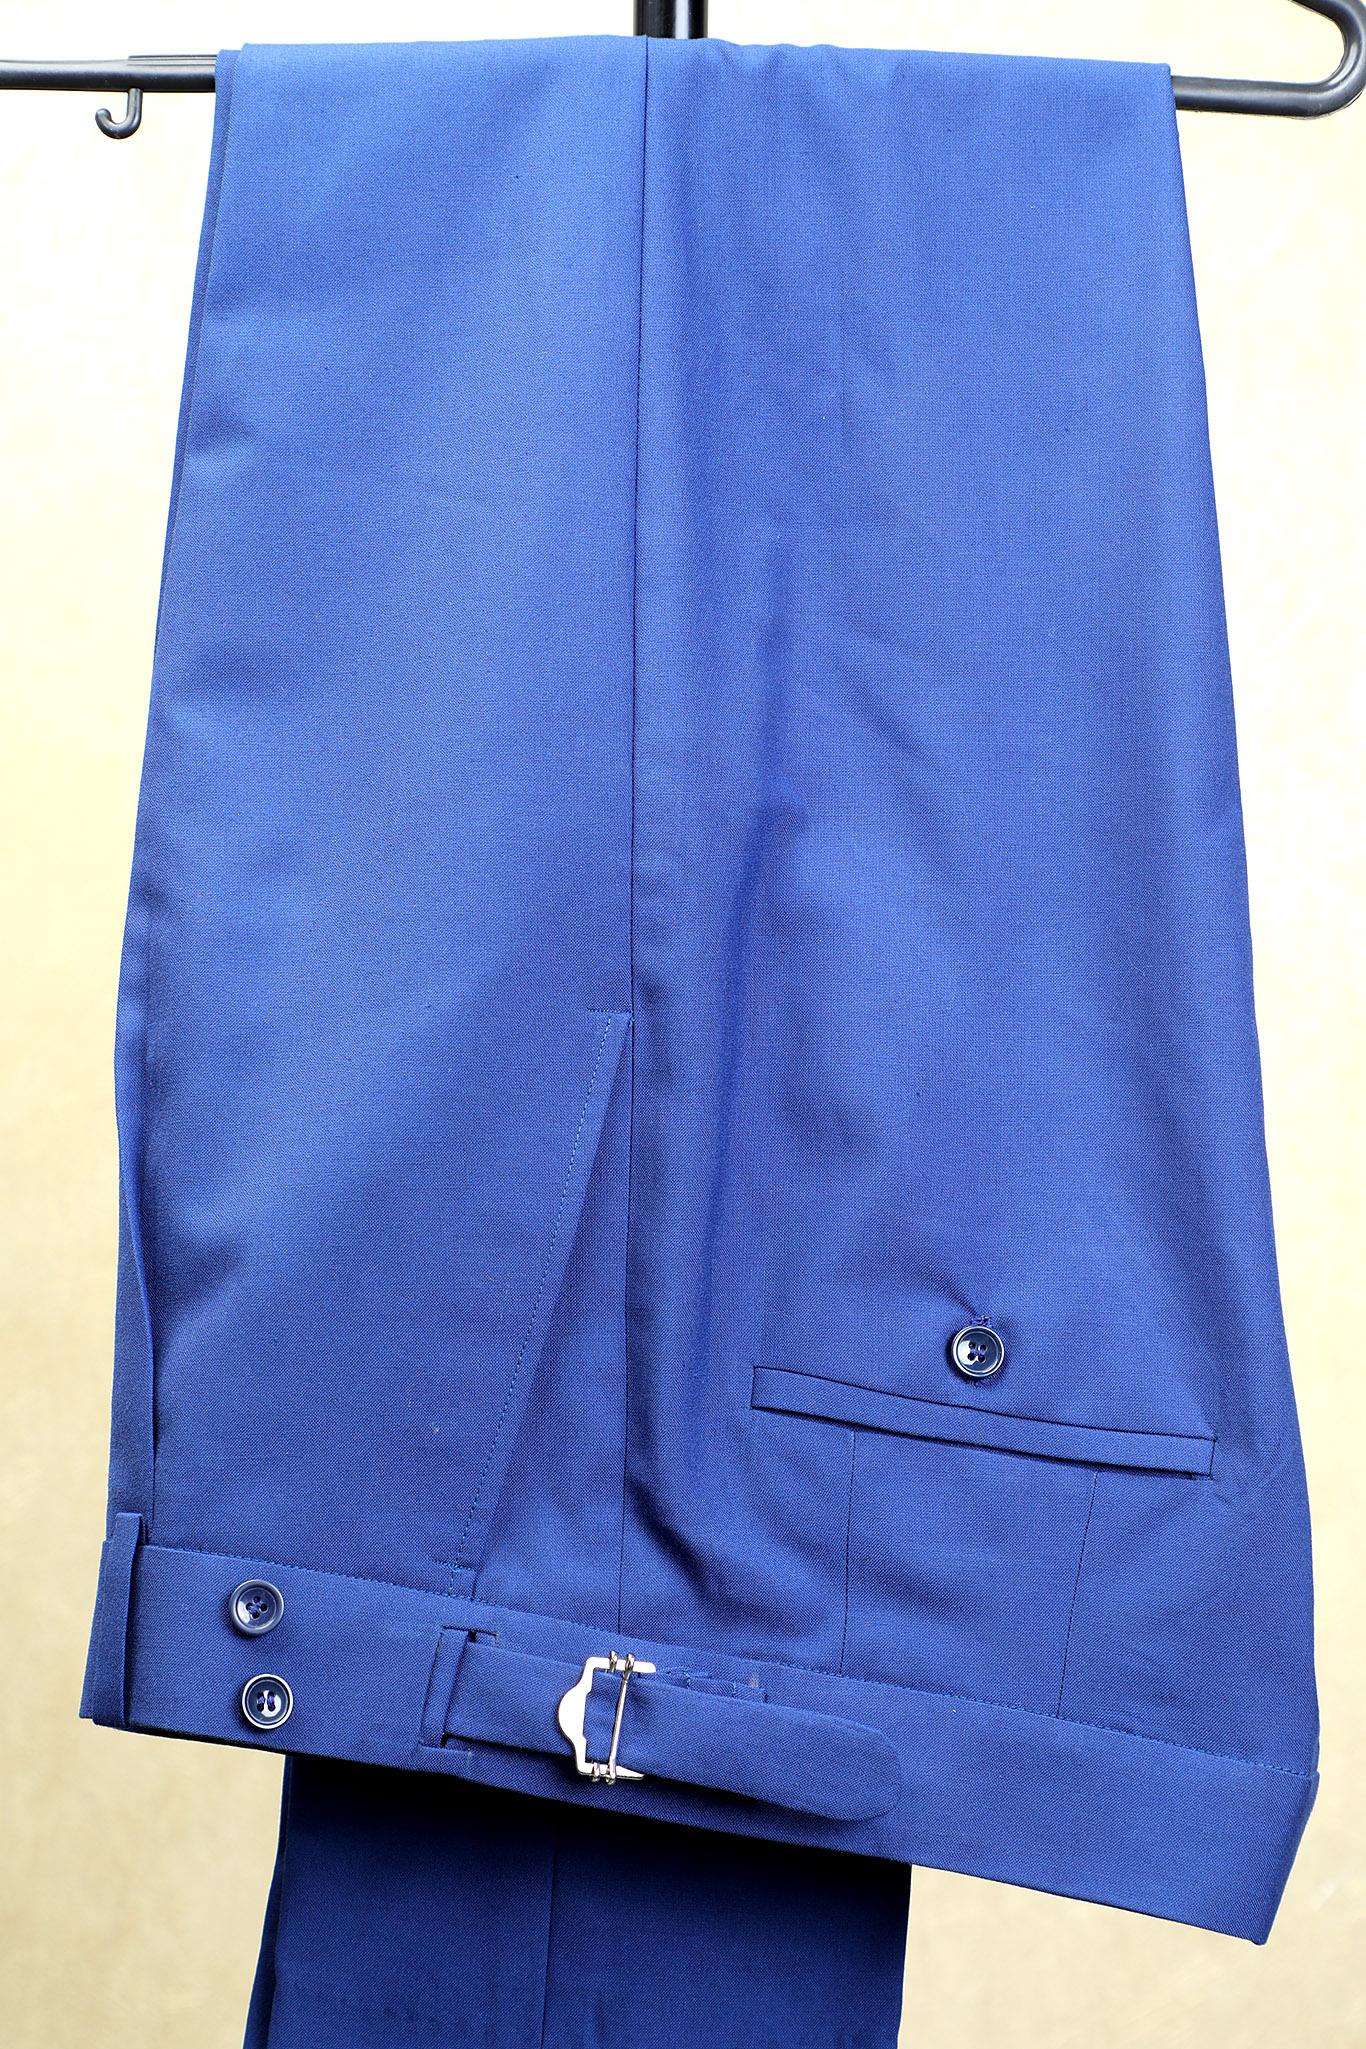 Blue formal pants in Nairobi Kenya